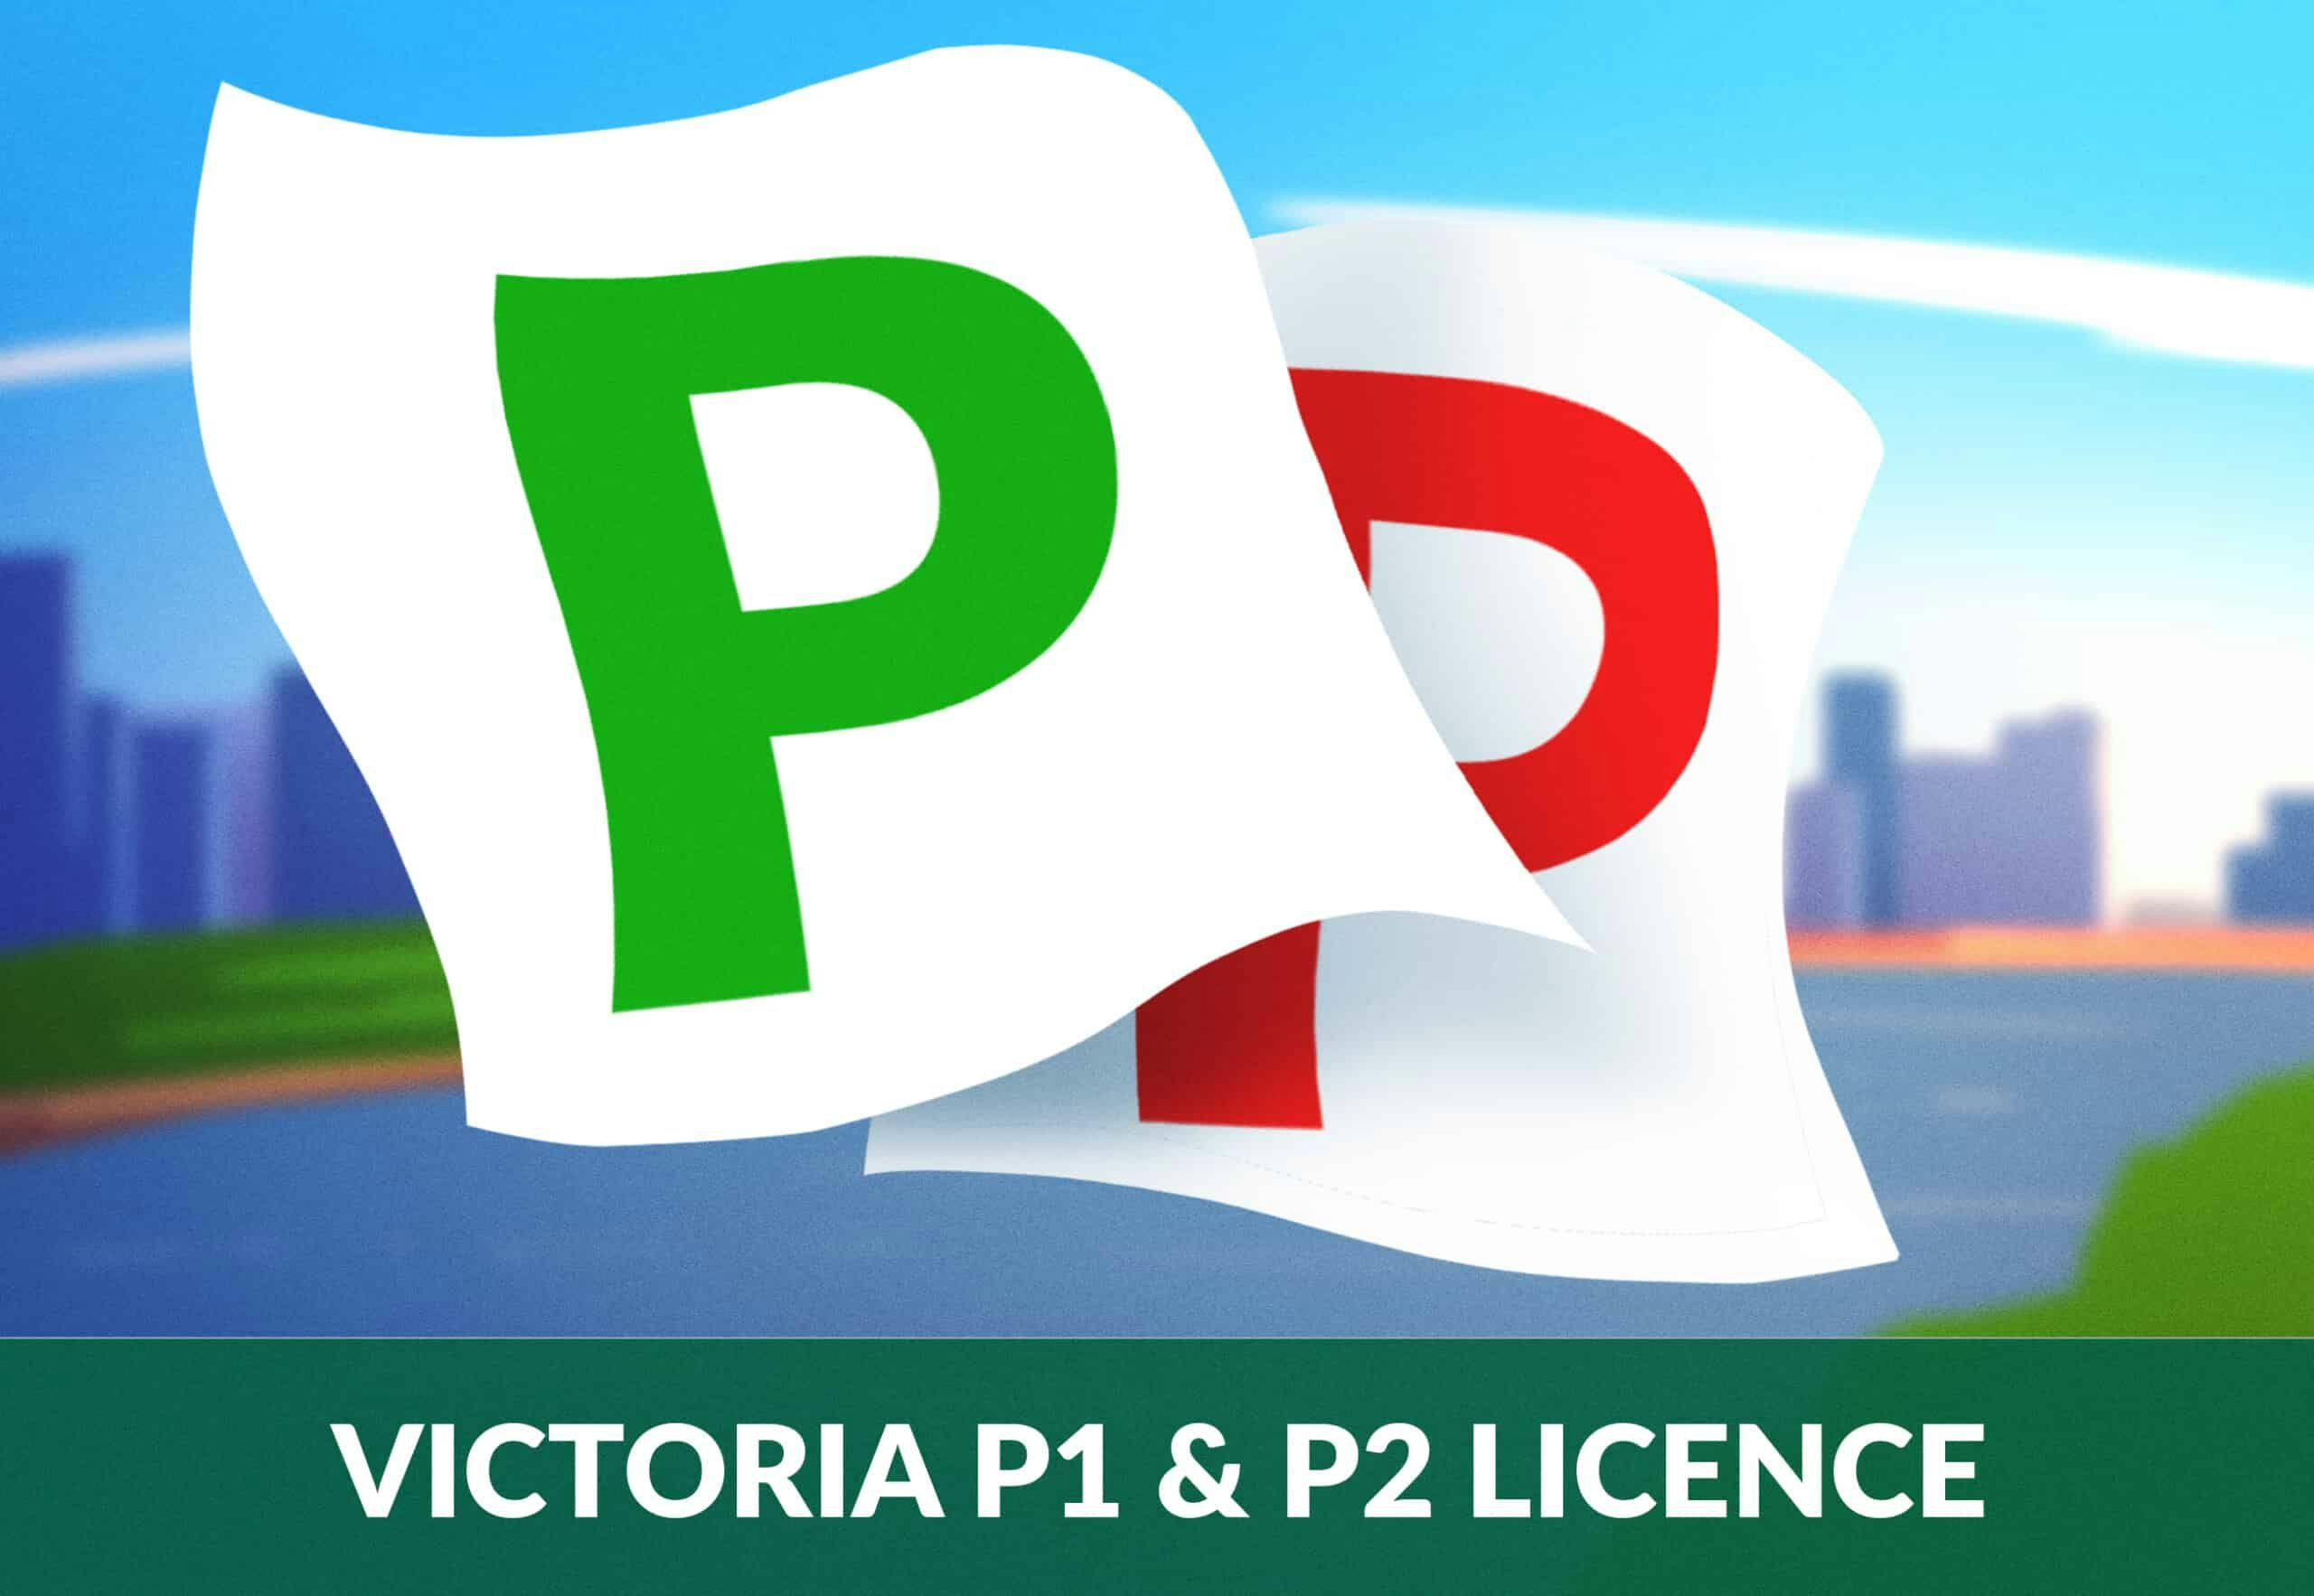 Victoria probationary licence p1 p2